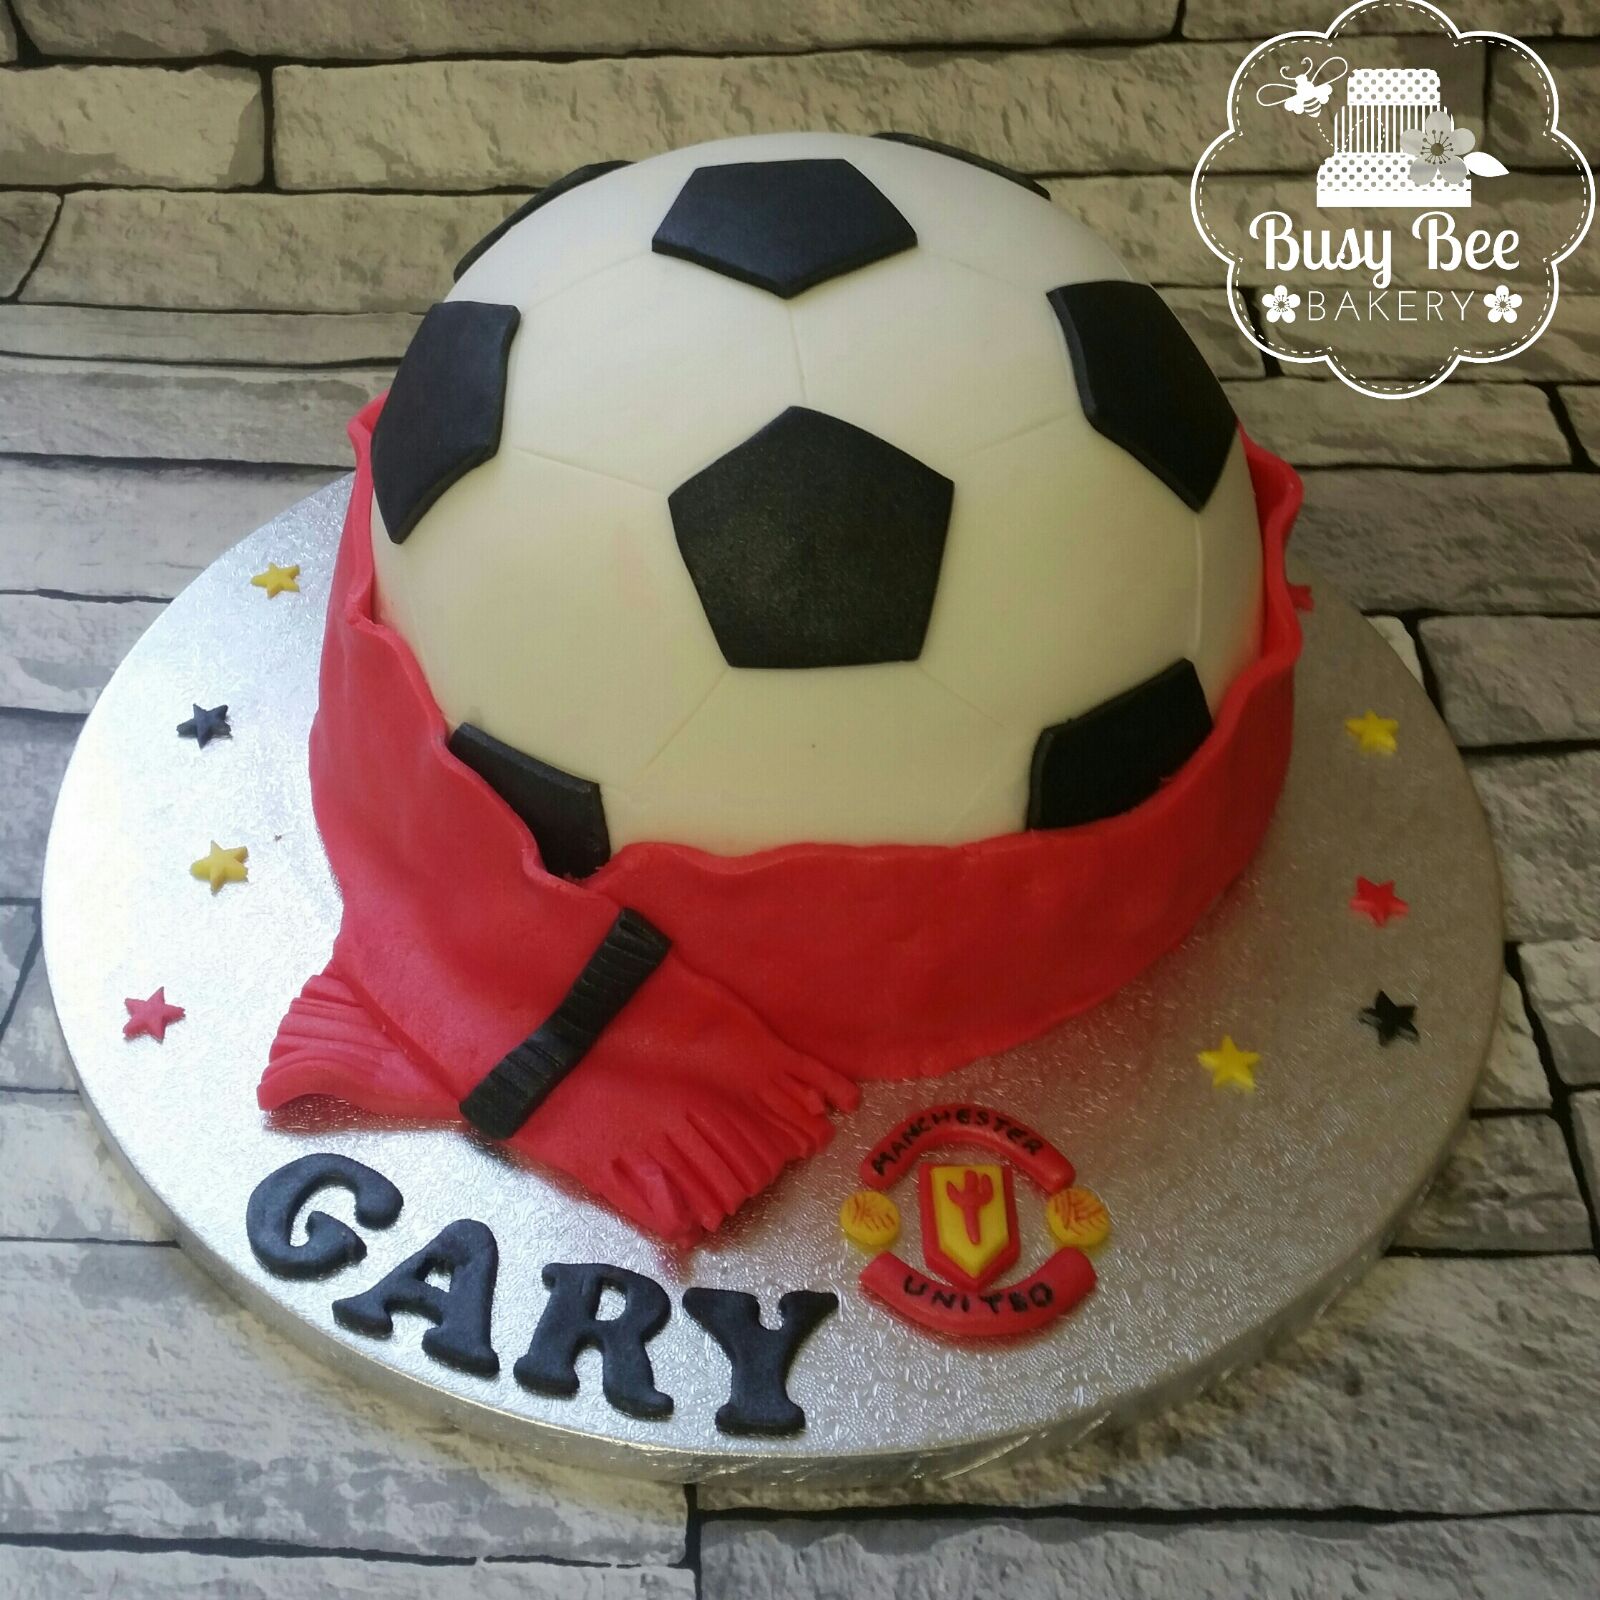 Football / Arsenal cake – CakeObsession